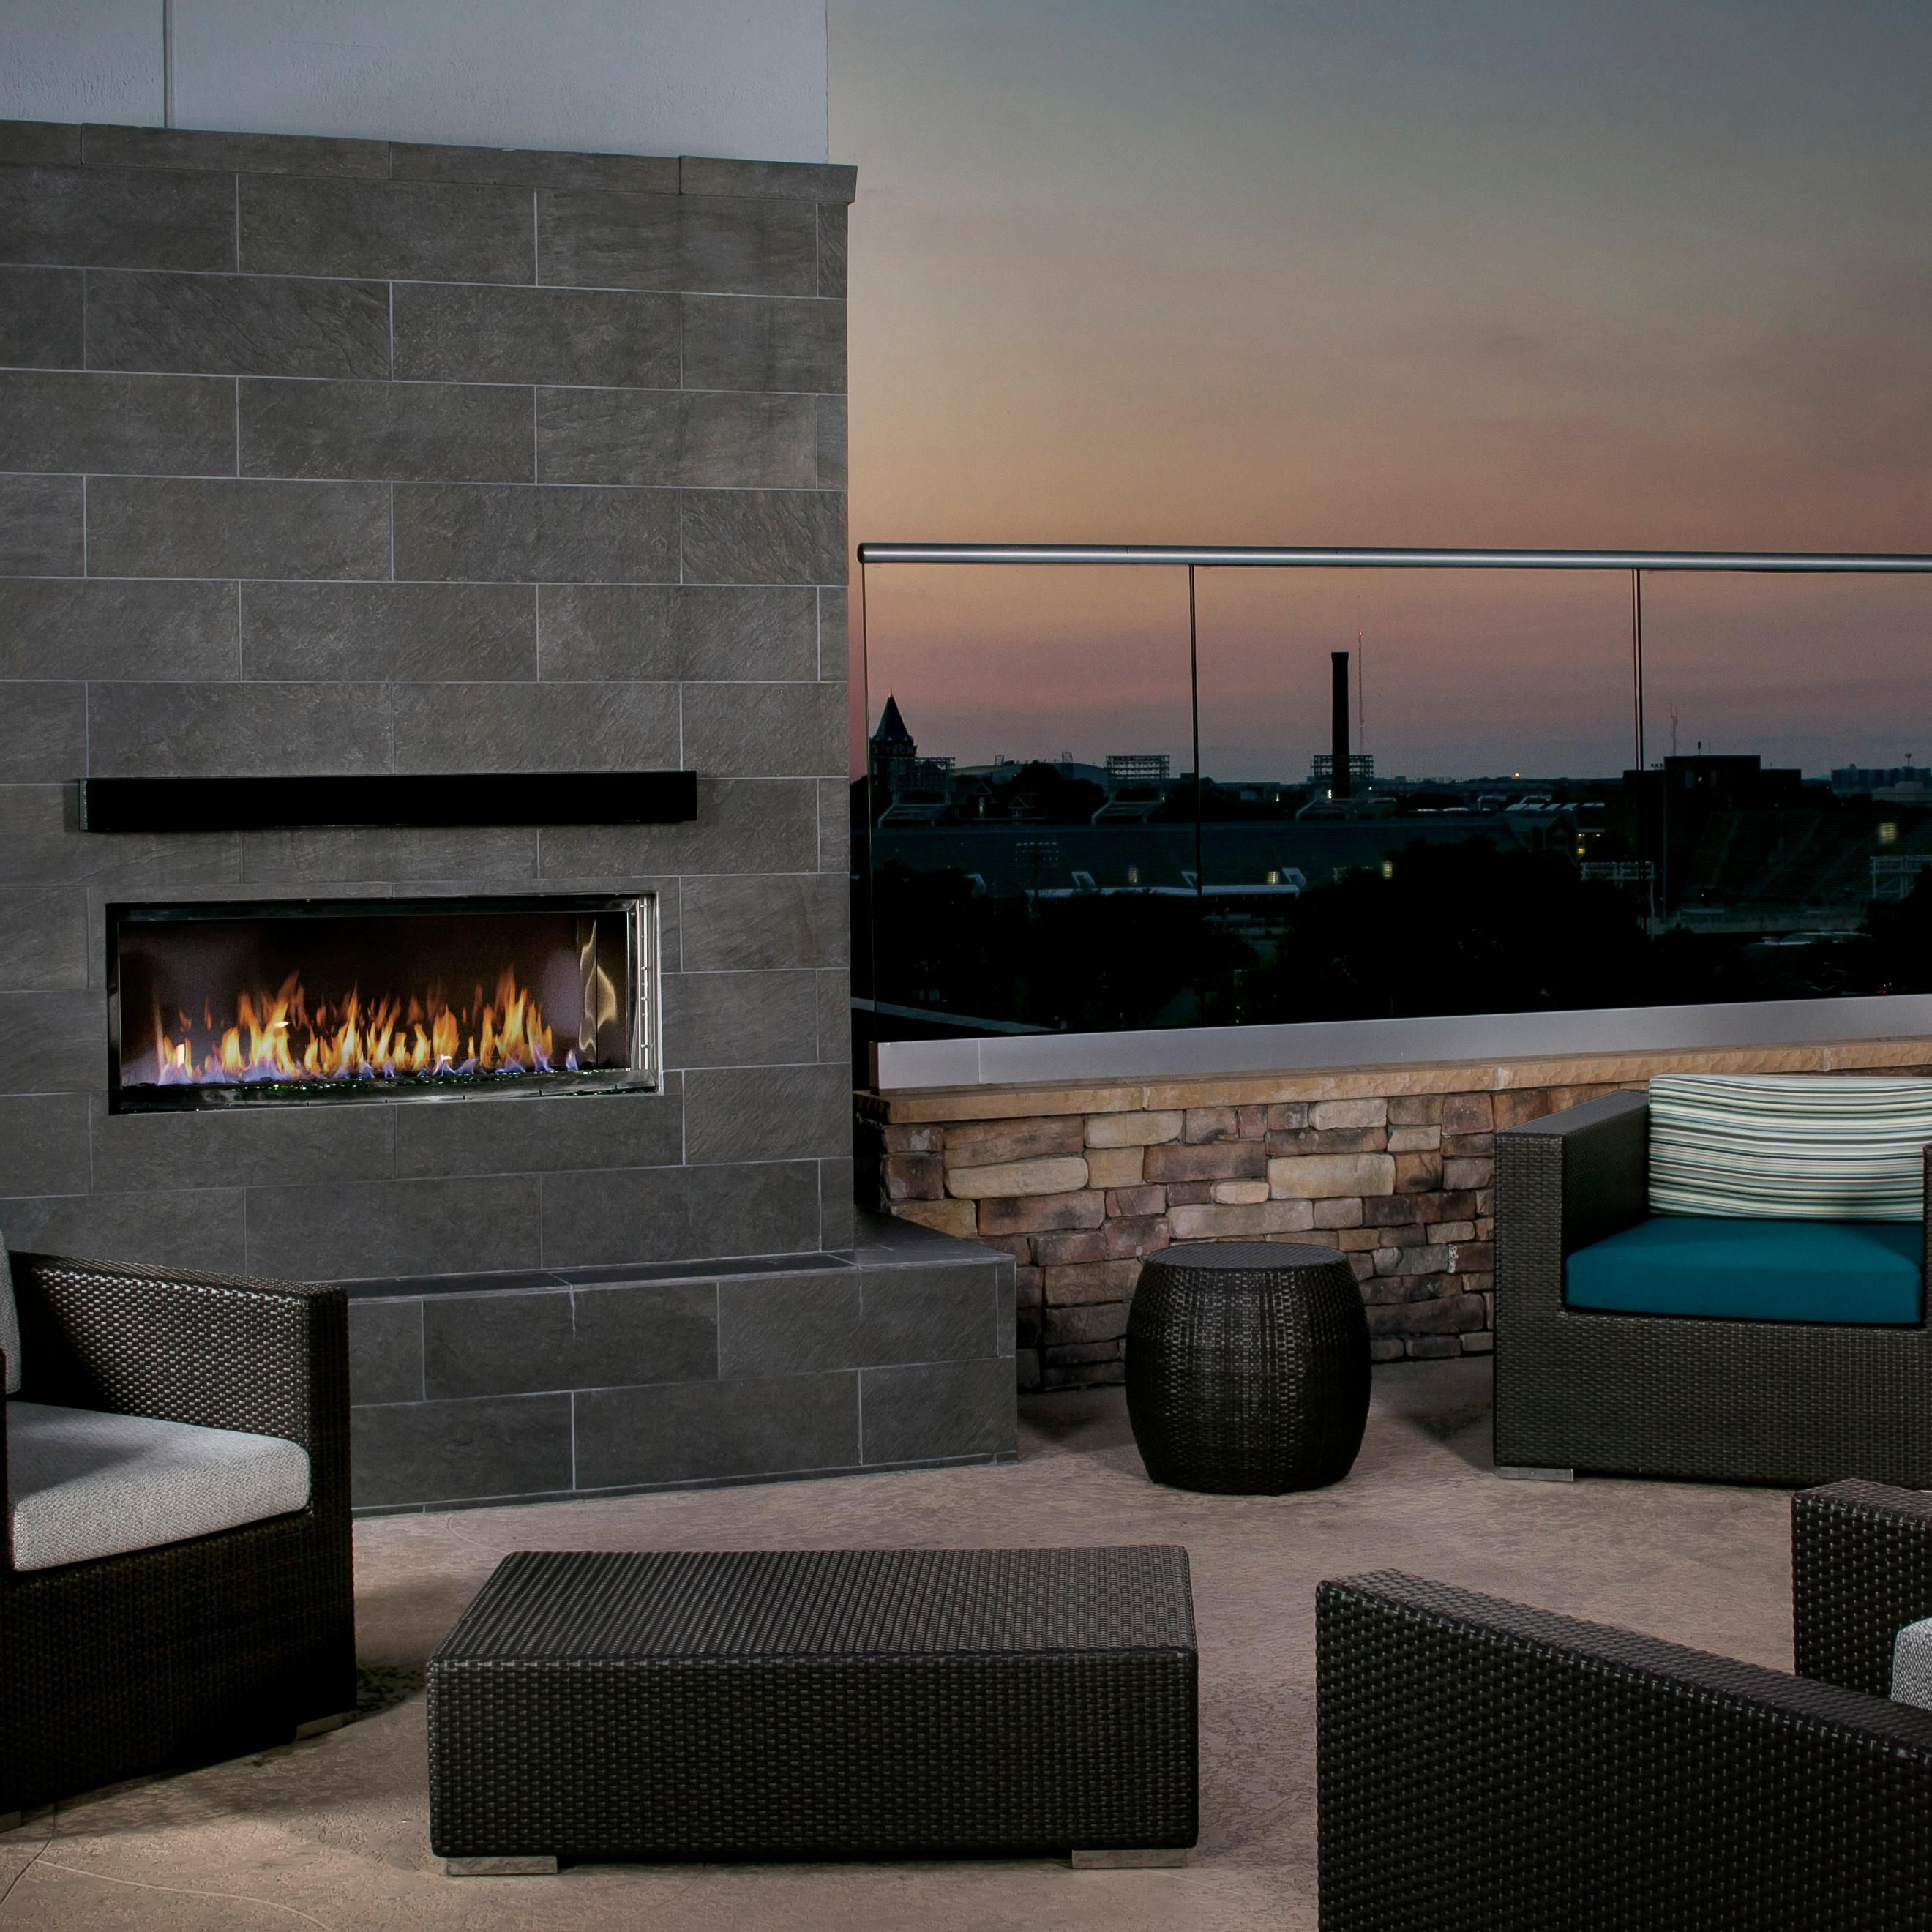 Cozy outdoor rooftop patio open year-round.